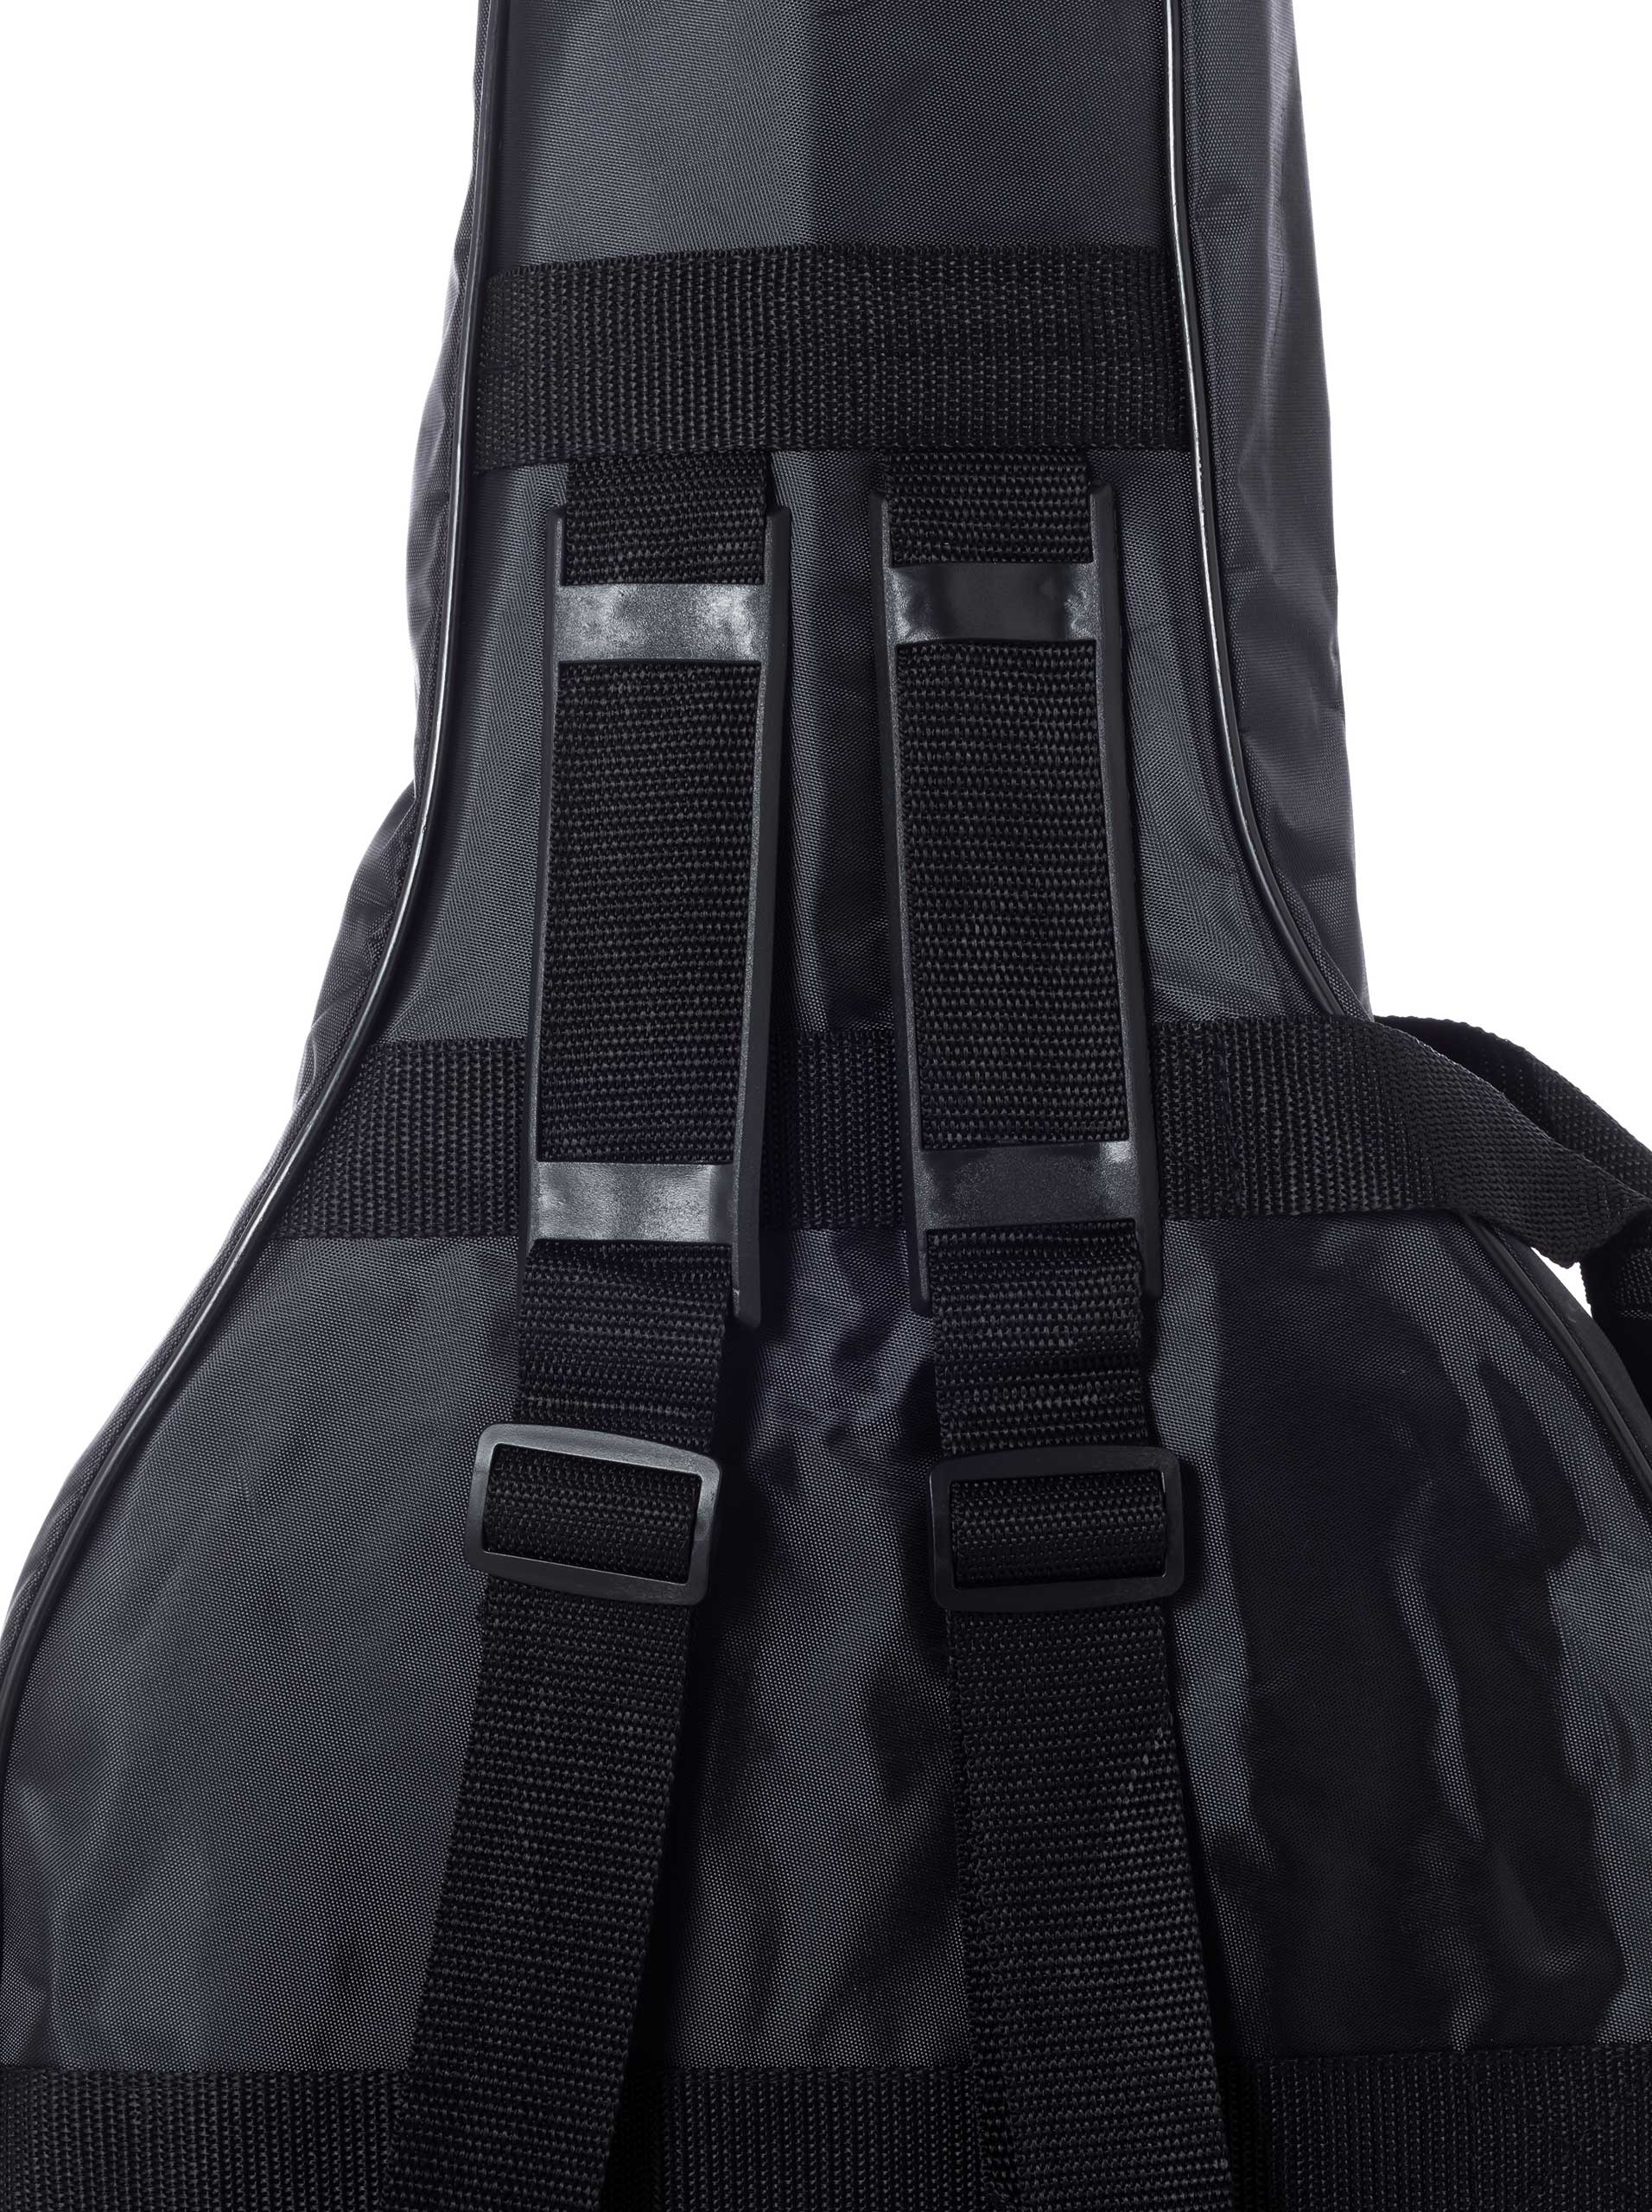 bag34cg-borsa-per-chitarra-classica-3-4-in-nylon-regolabile-nera